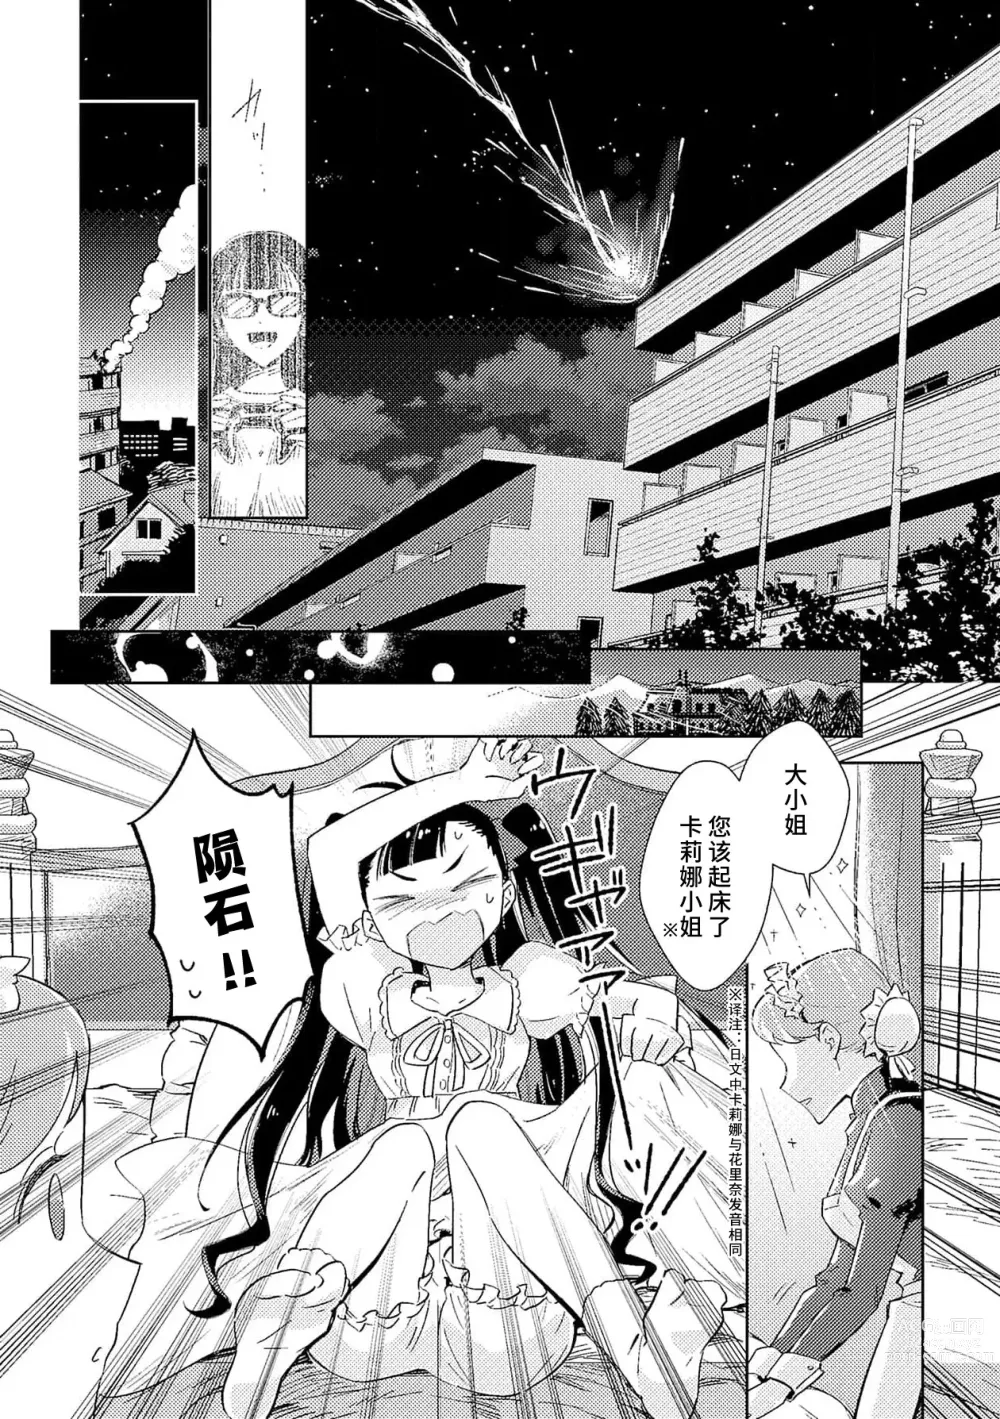 Page 5 of manga 身为恶役千金，堕落于魔界王子身下这条路线真的可以有？ 1-4